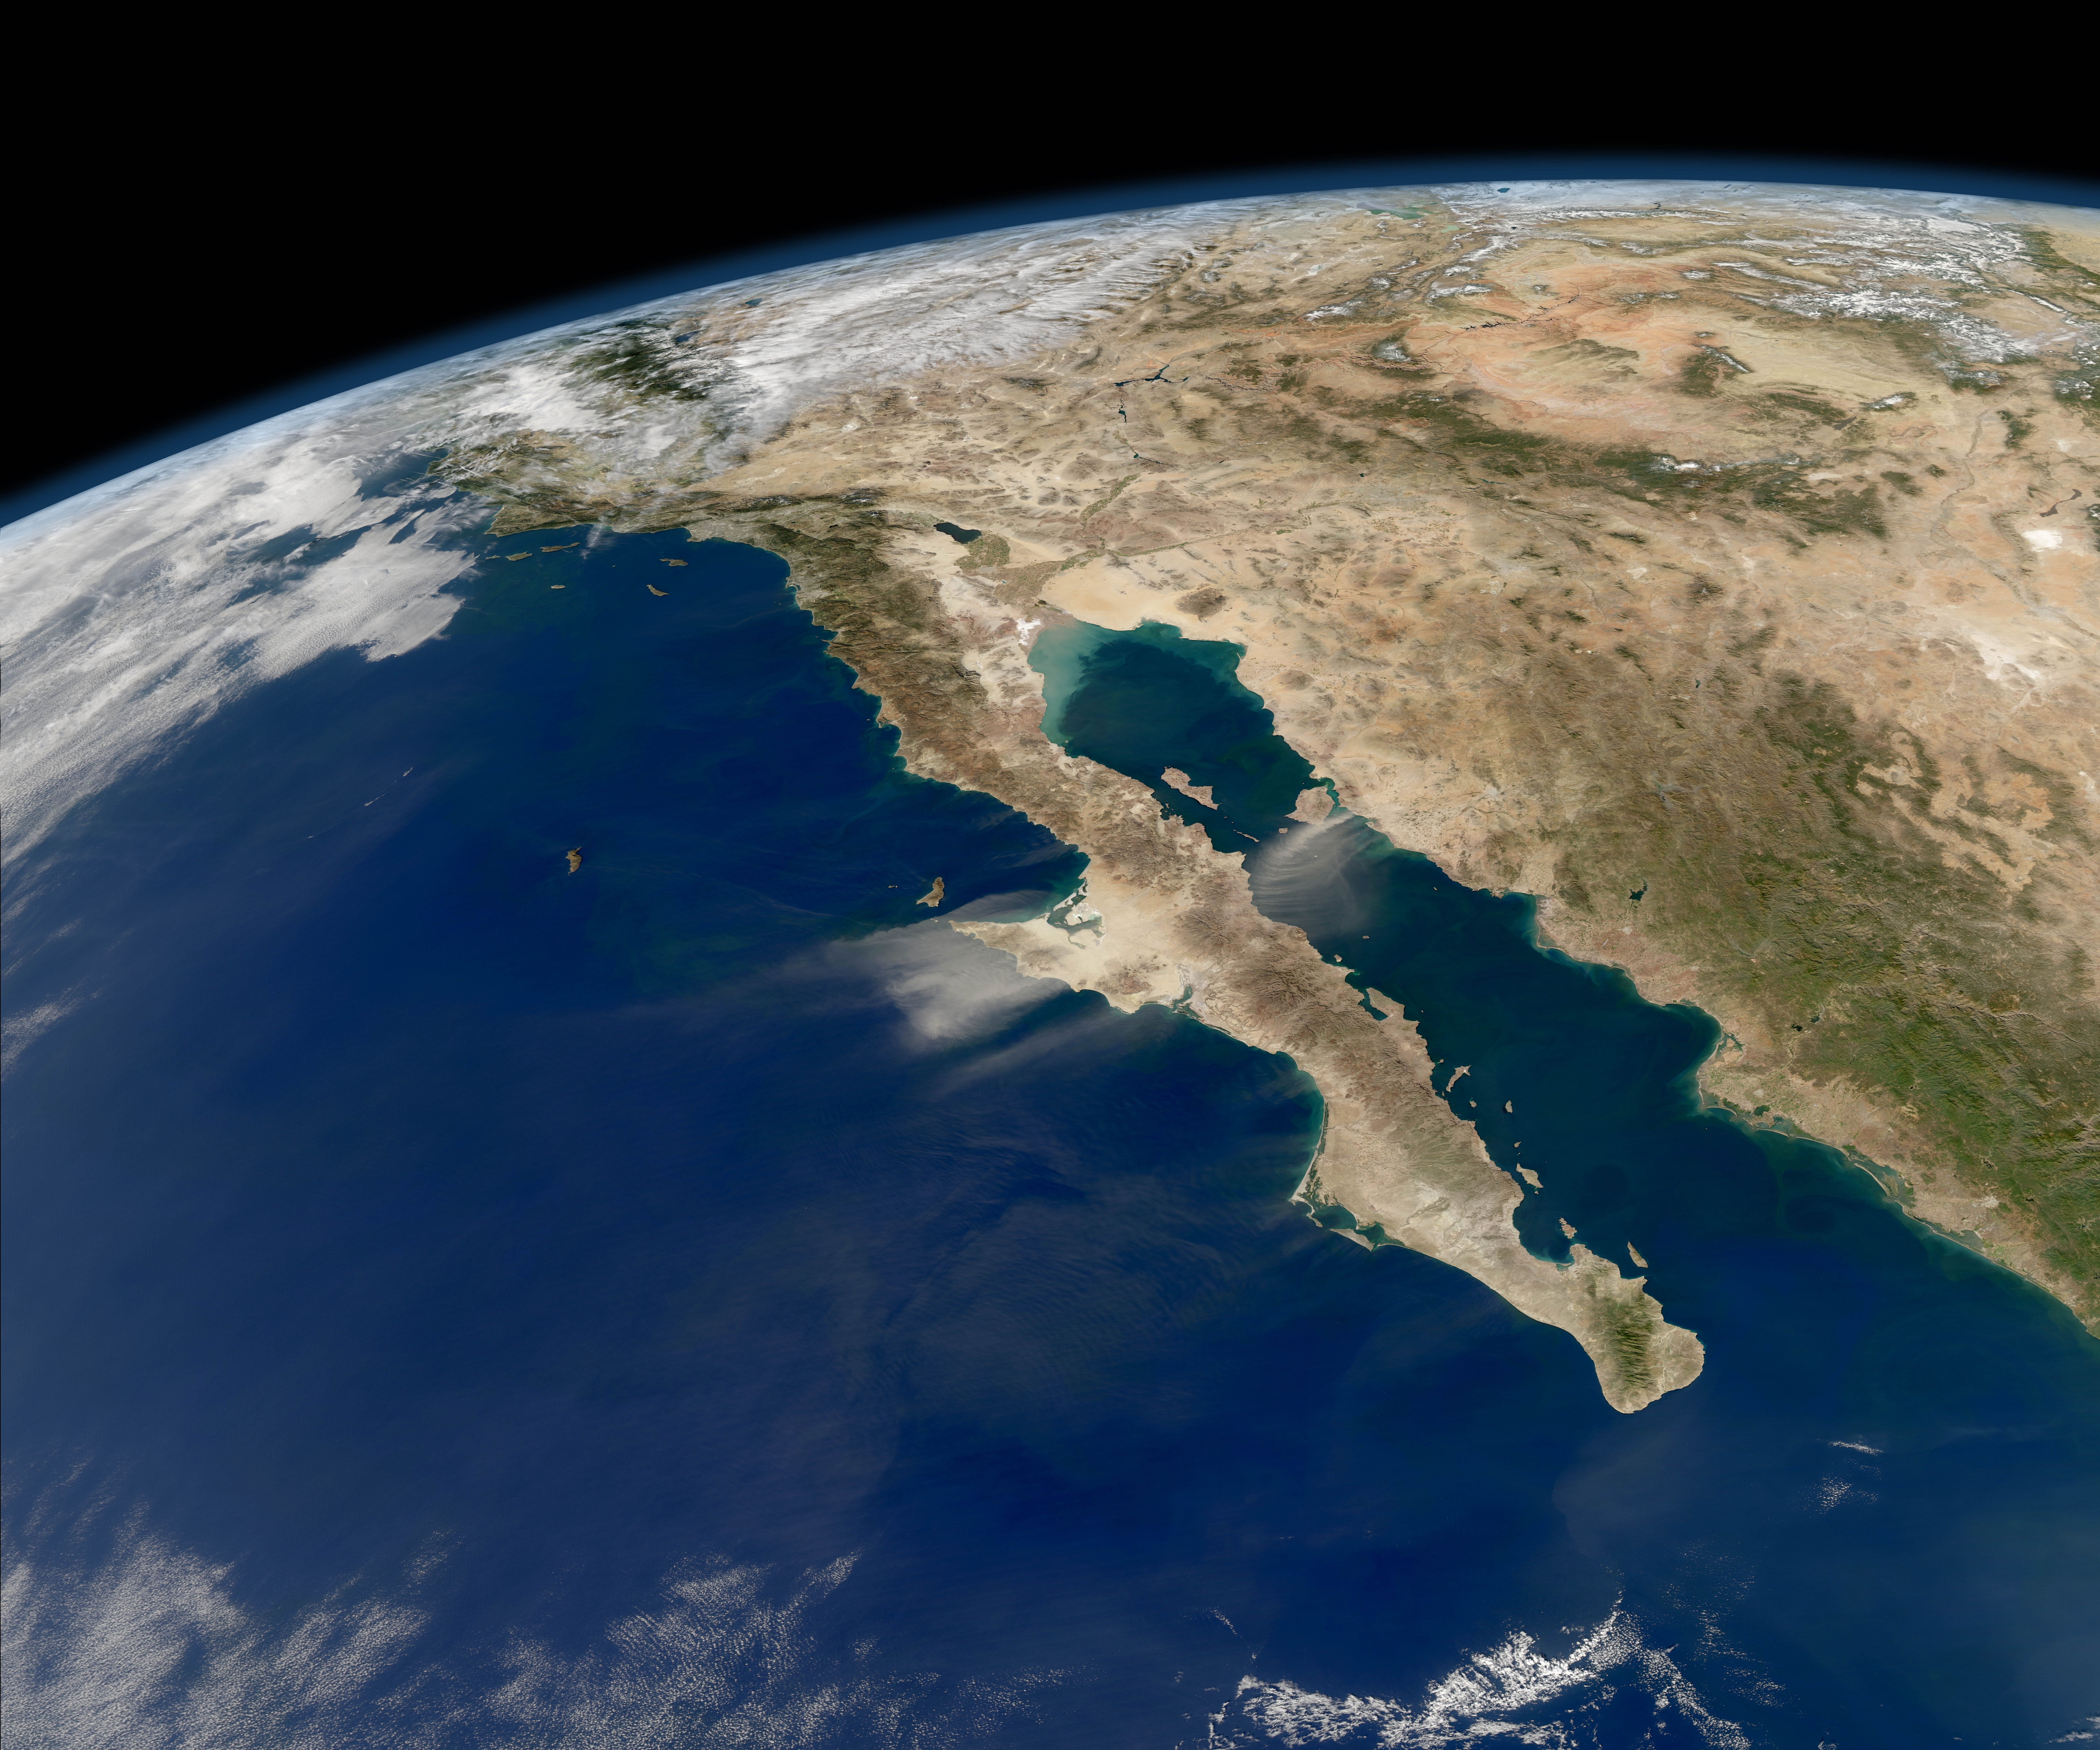 FileBaja California   NASA Earth Observatoryjpg   Wikimedia Commons